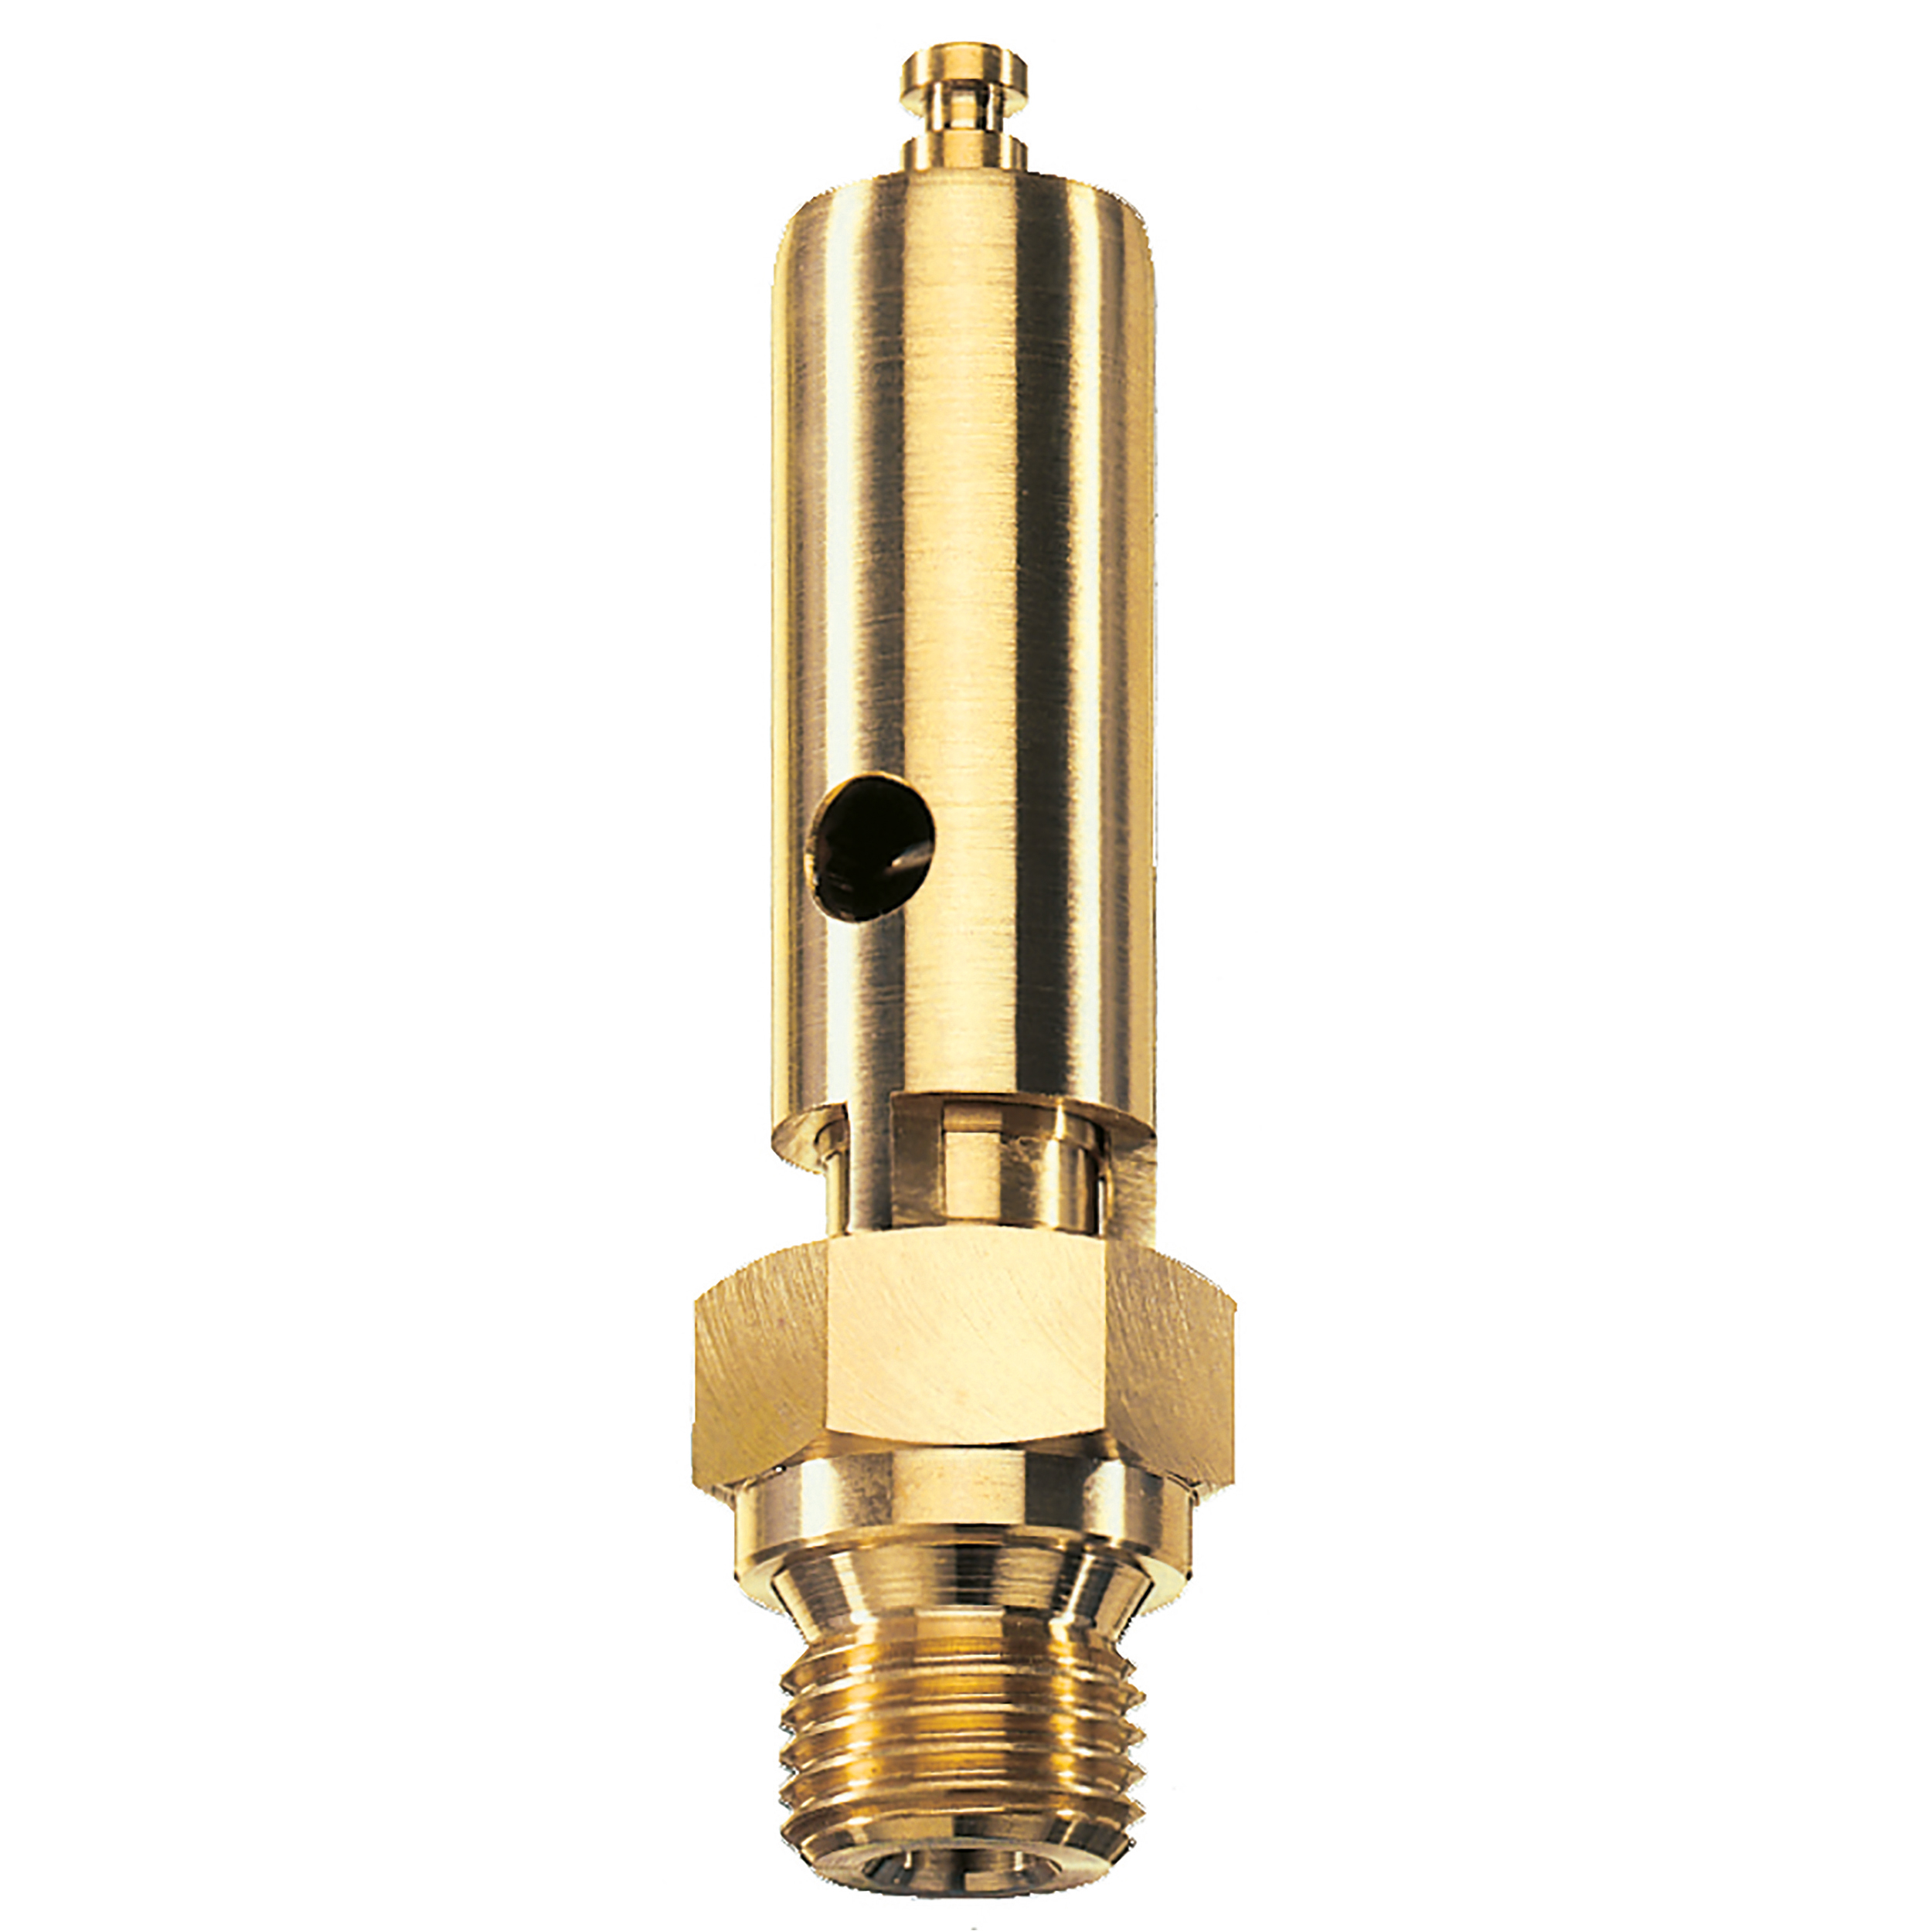 Component-tested safety valve DN 6, G⅜, pressure: 10.1-13 bar